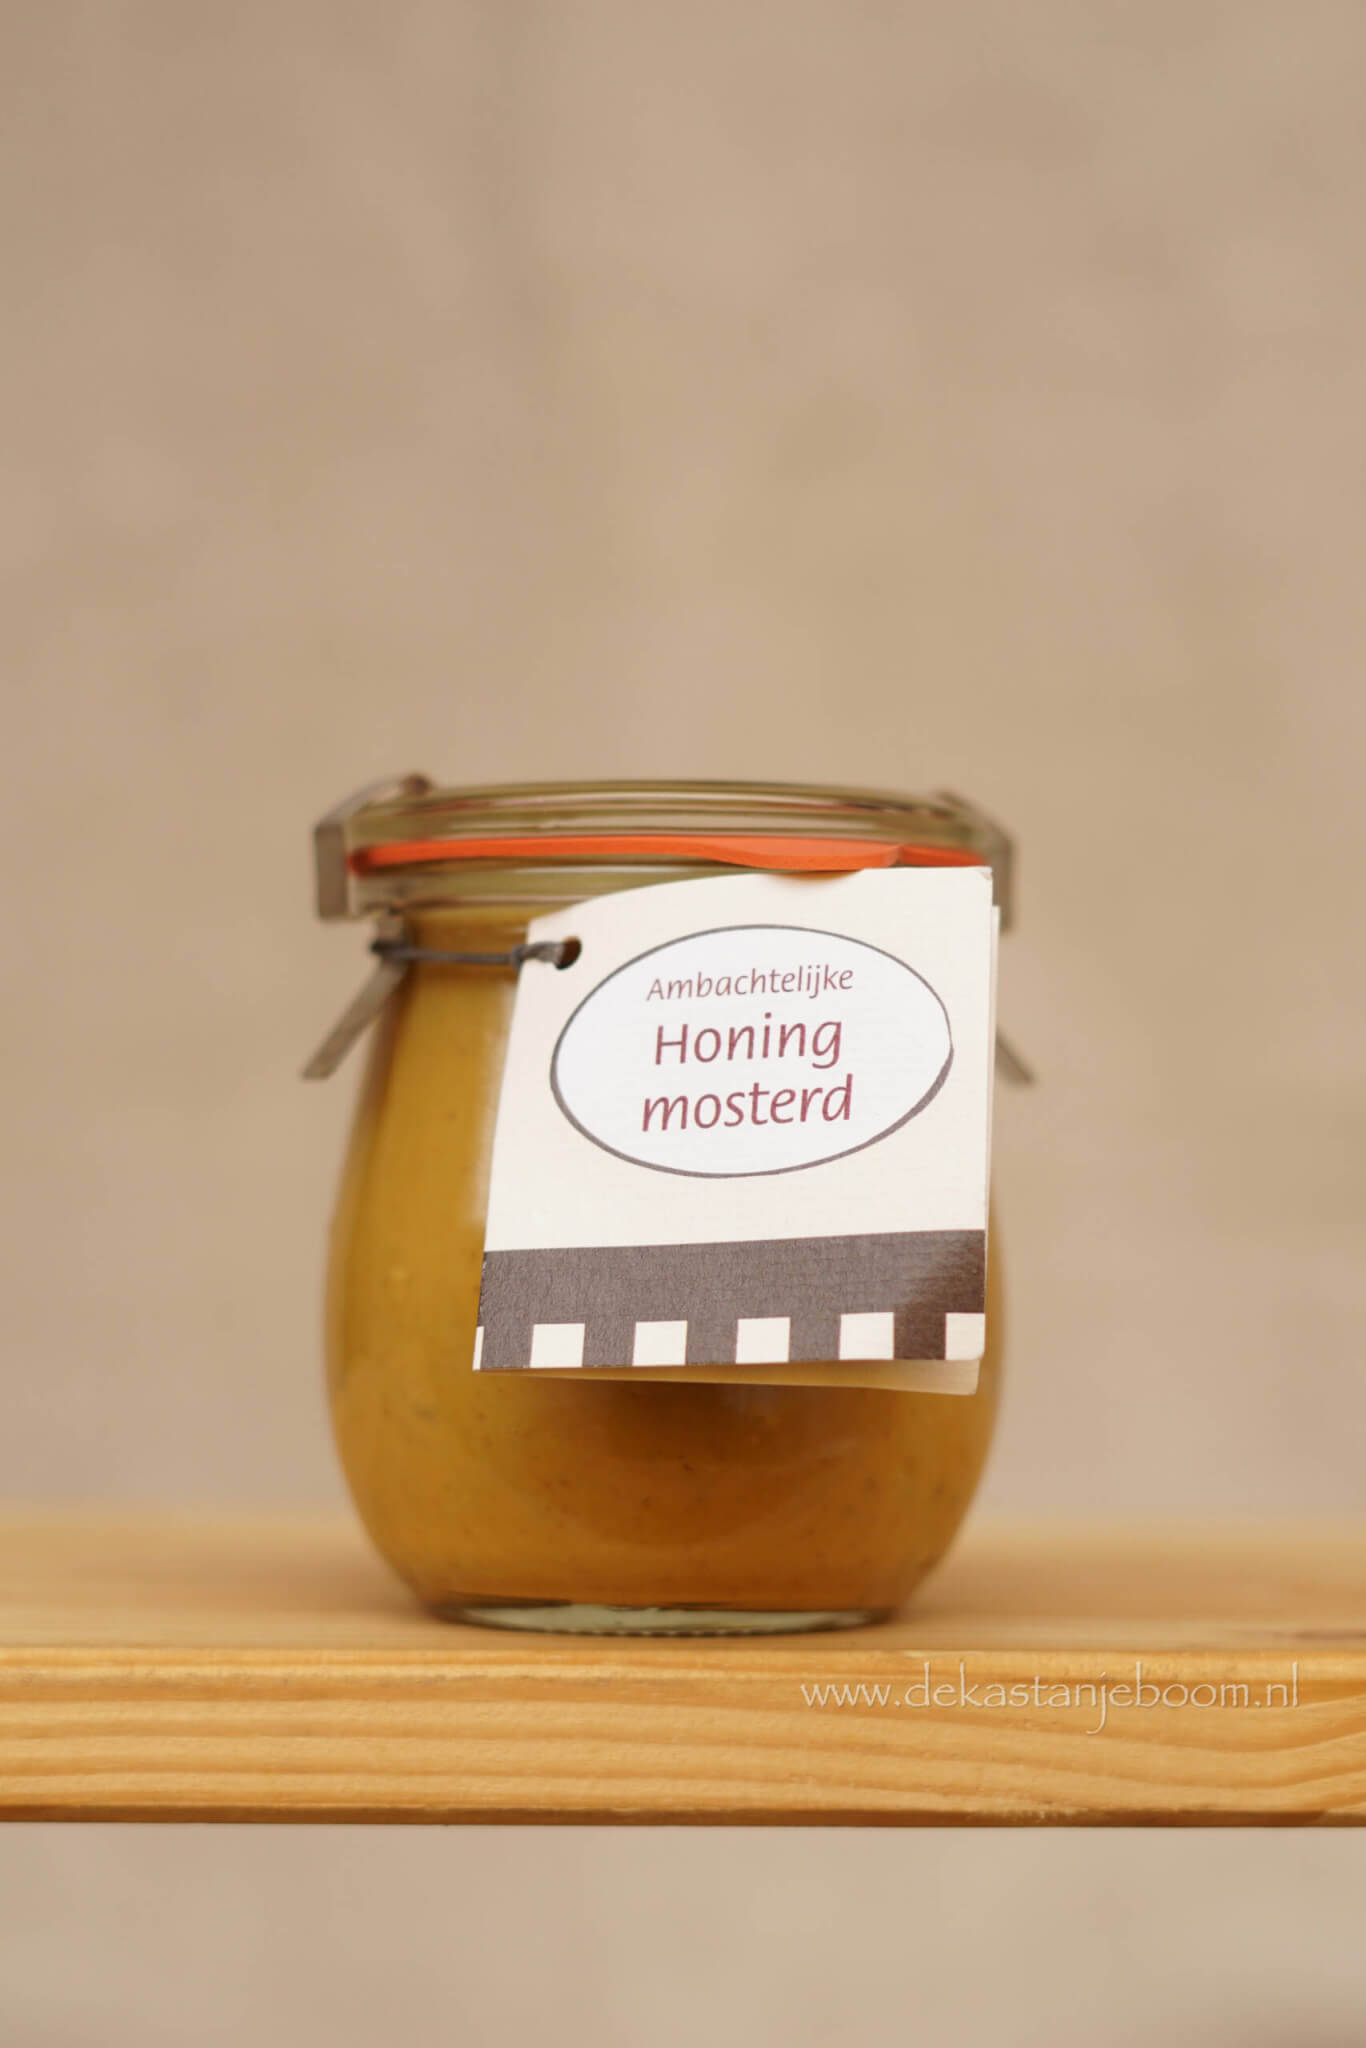 Honing mosterd